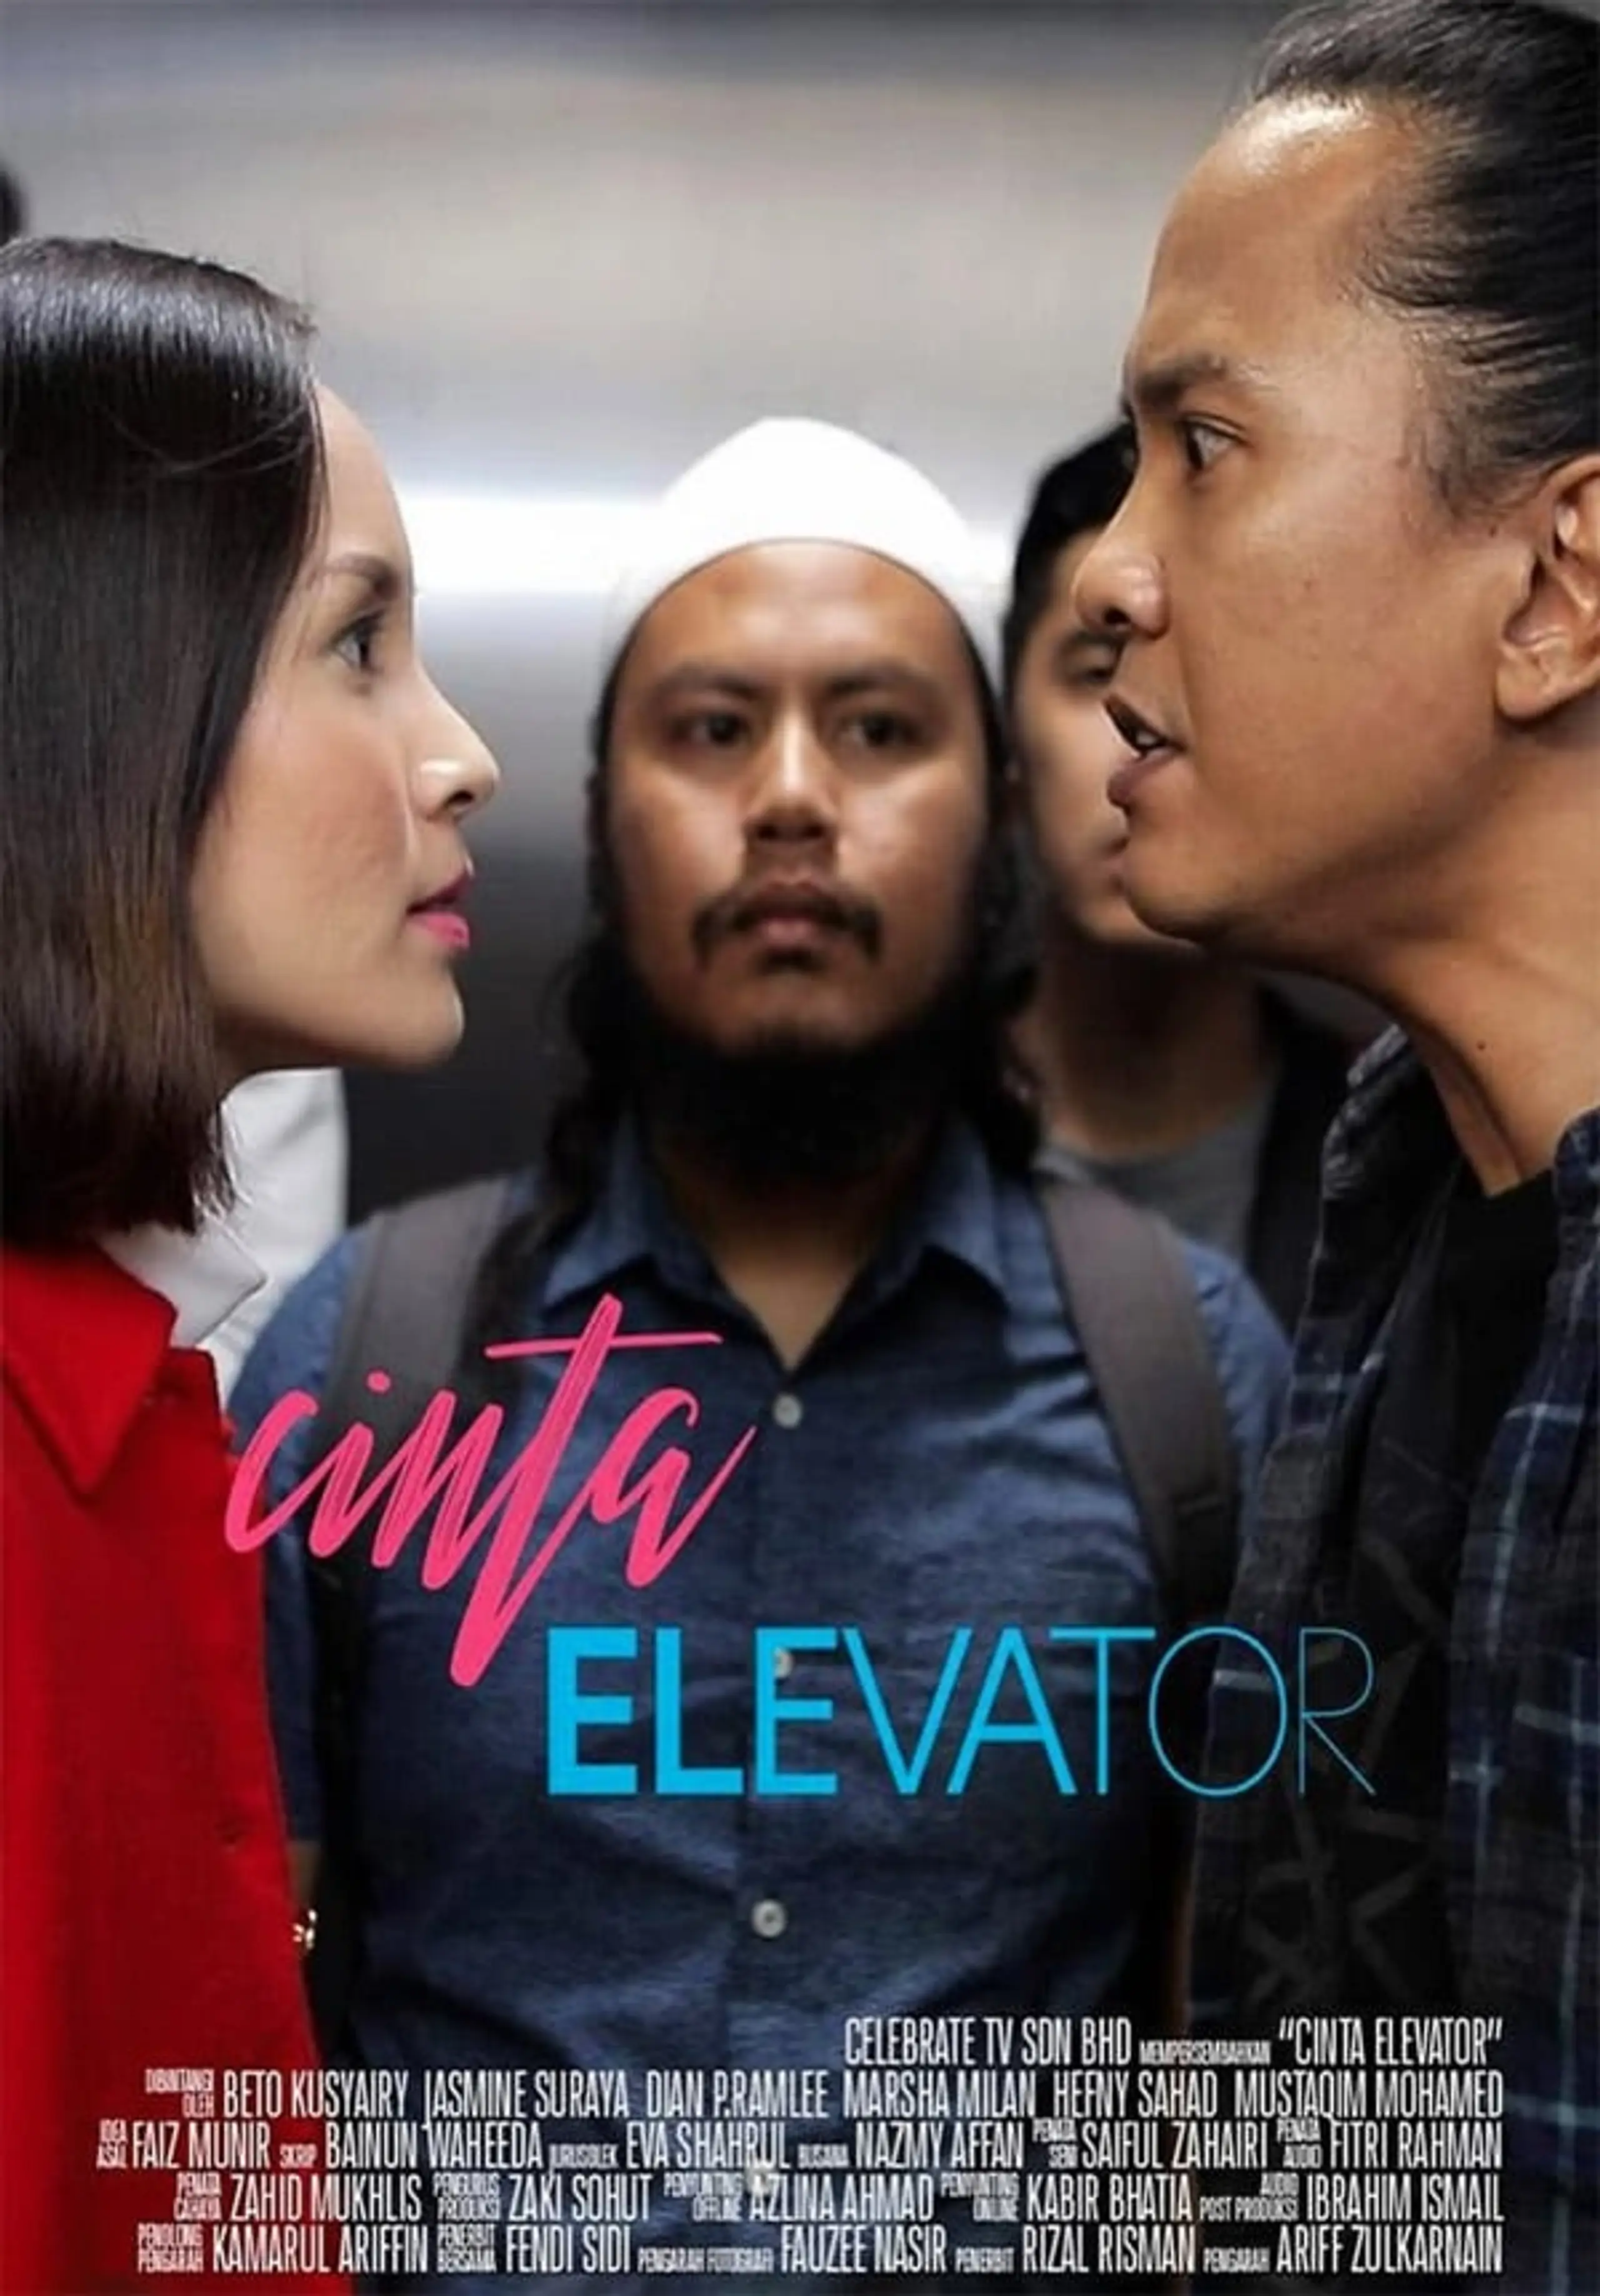 Cinta Elevator